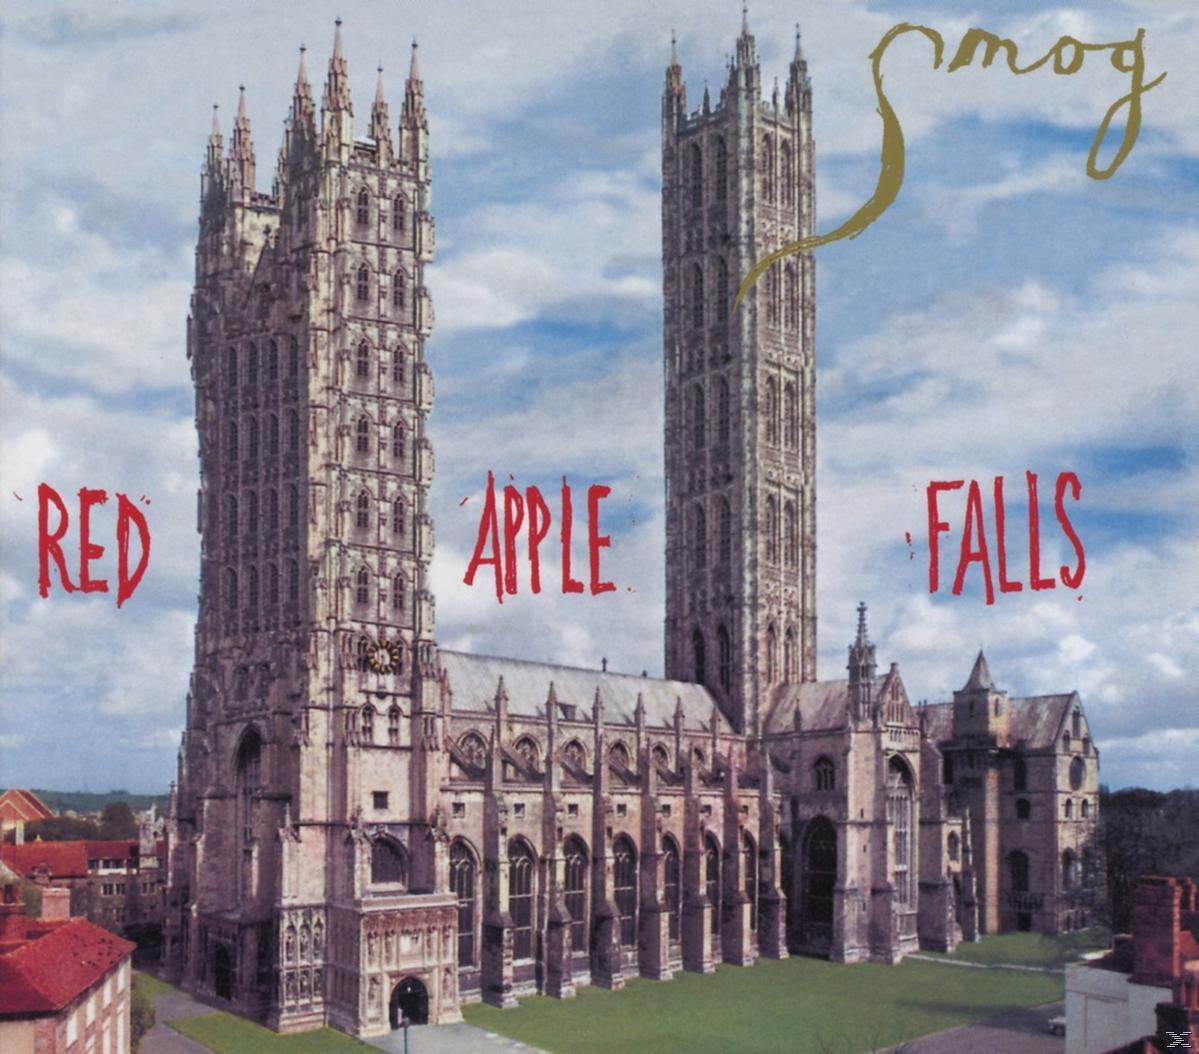 Apple (CD) - - Smog Red Falls